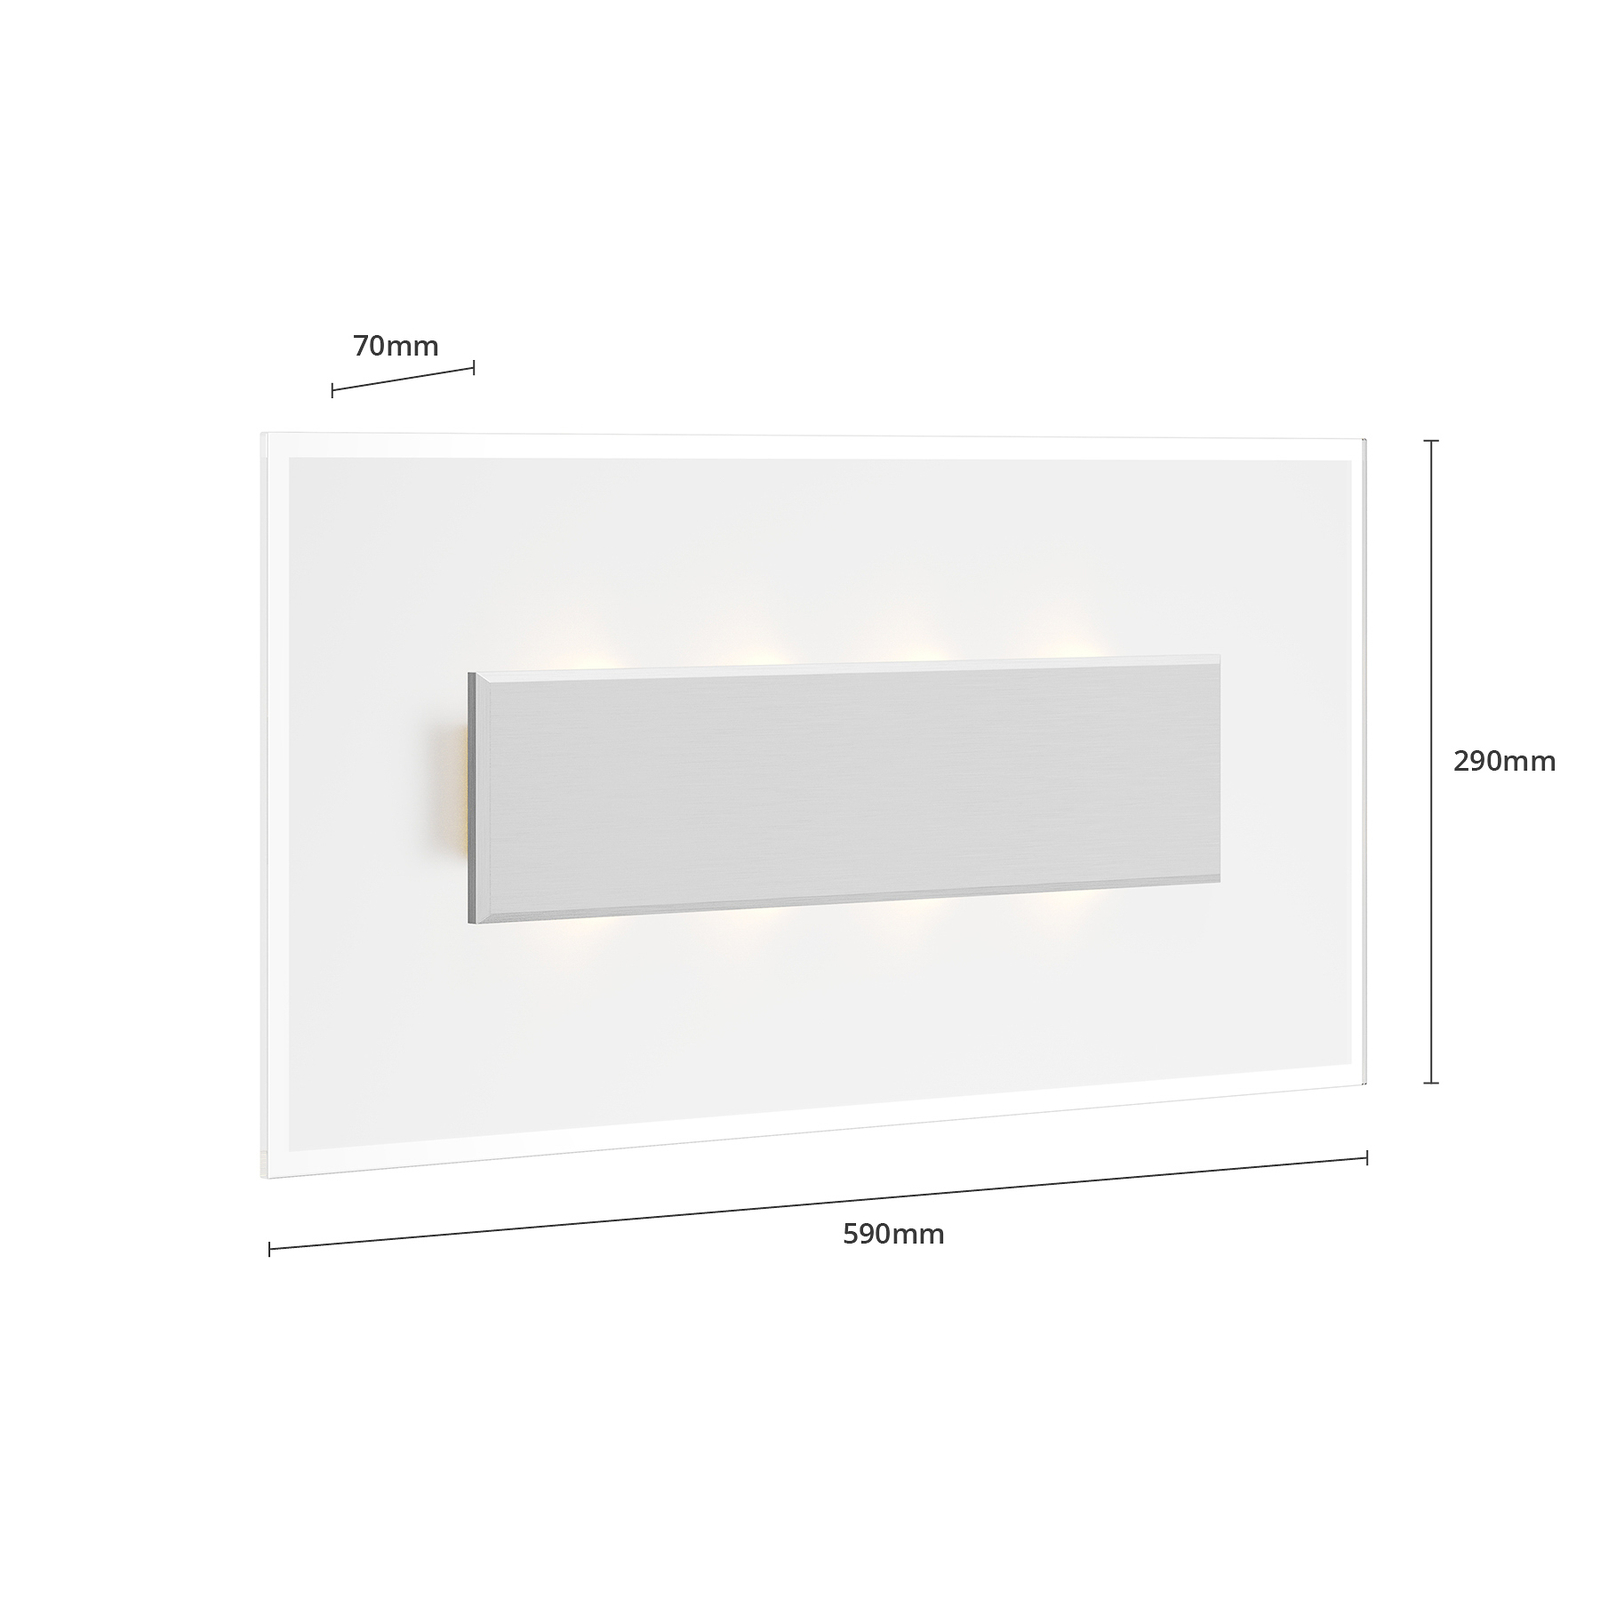 Quitani LED fali lámpa Lole, alumínium, 59 x 29 cm, üveg